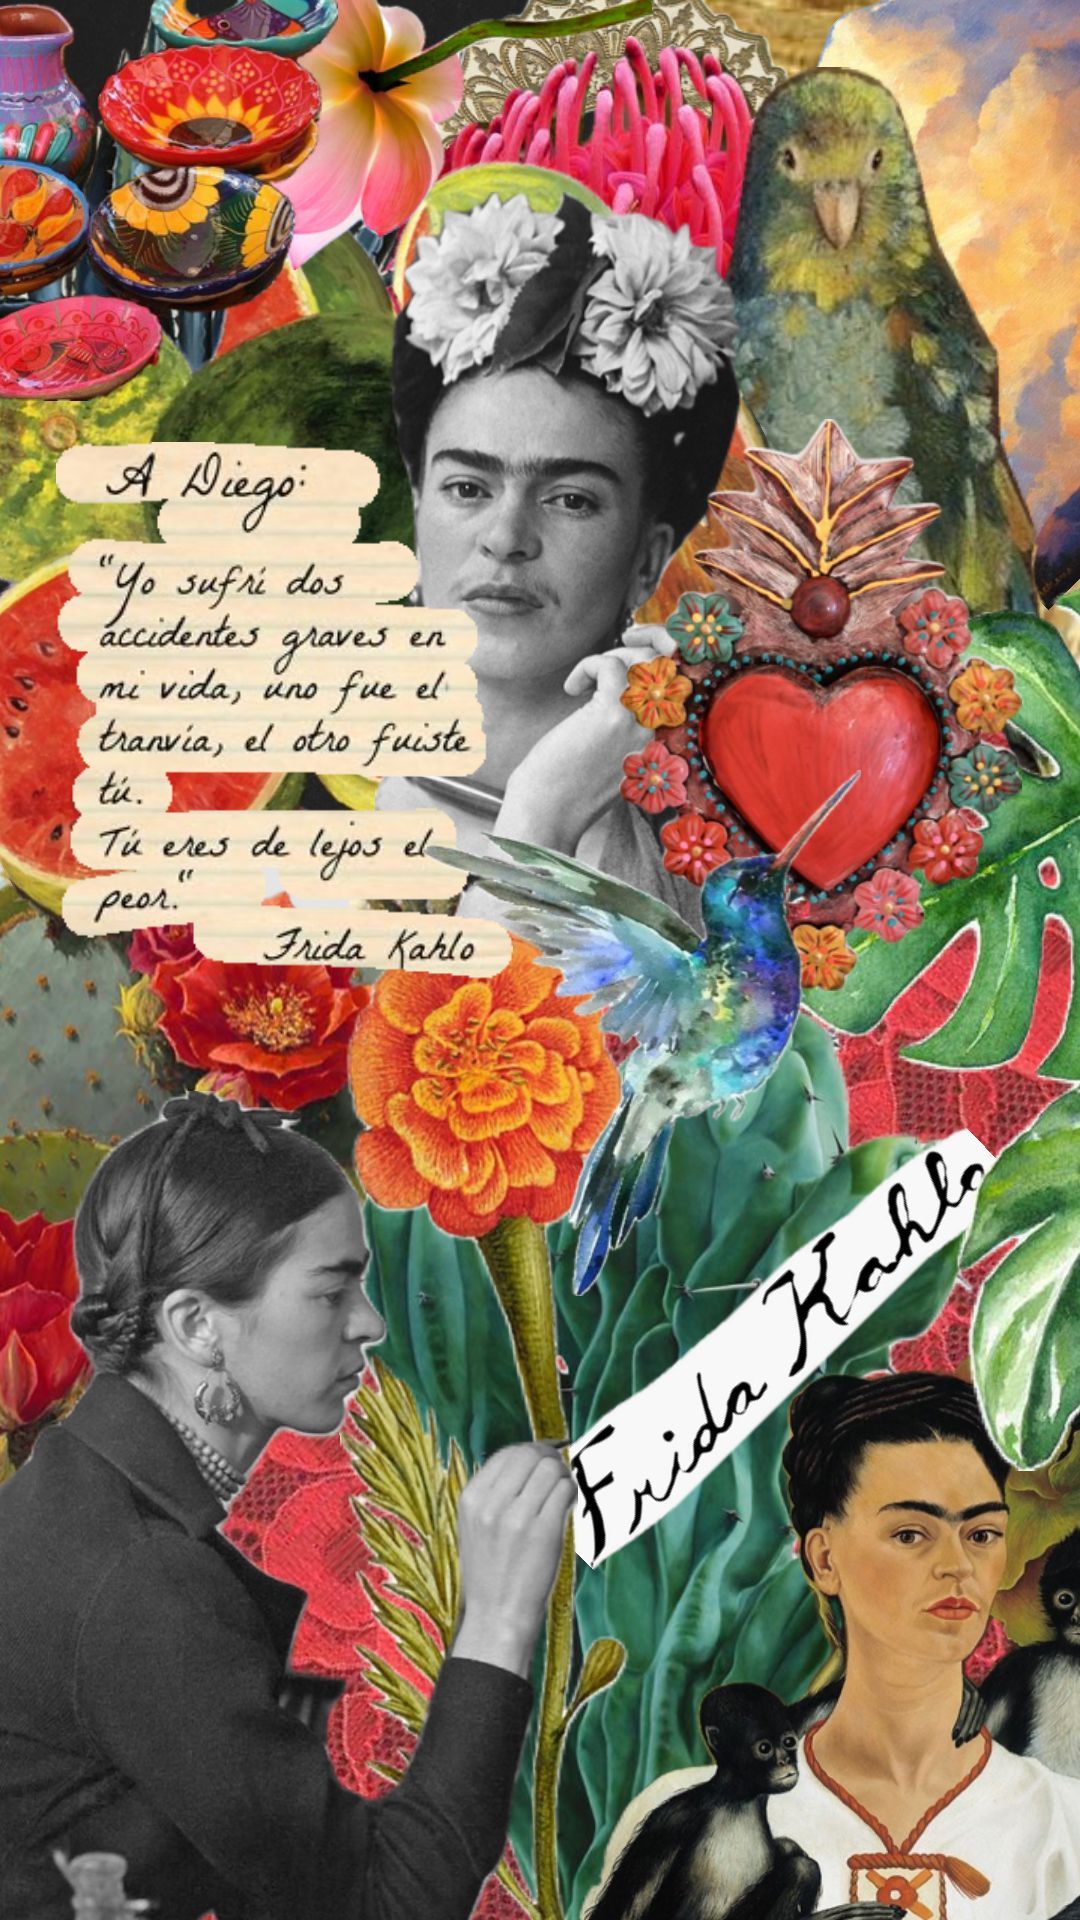 Frida kahlo artwork